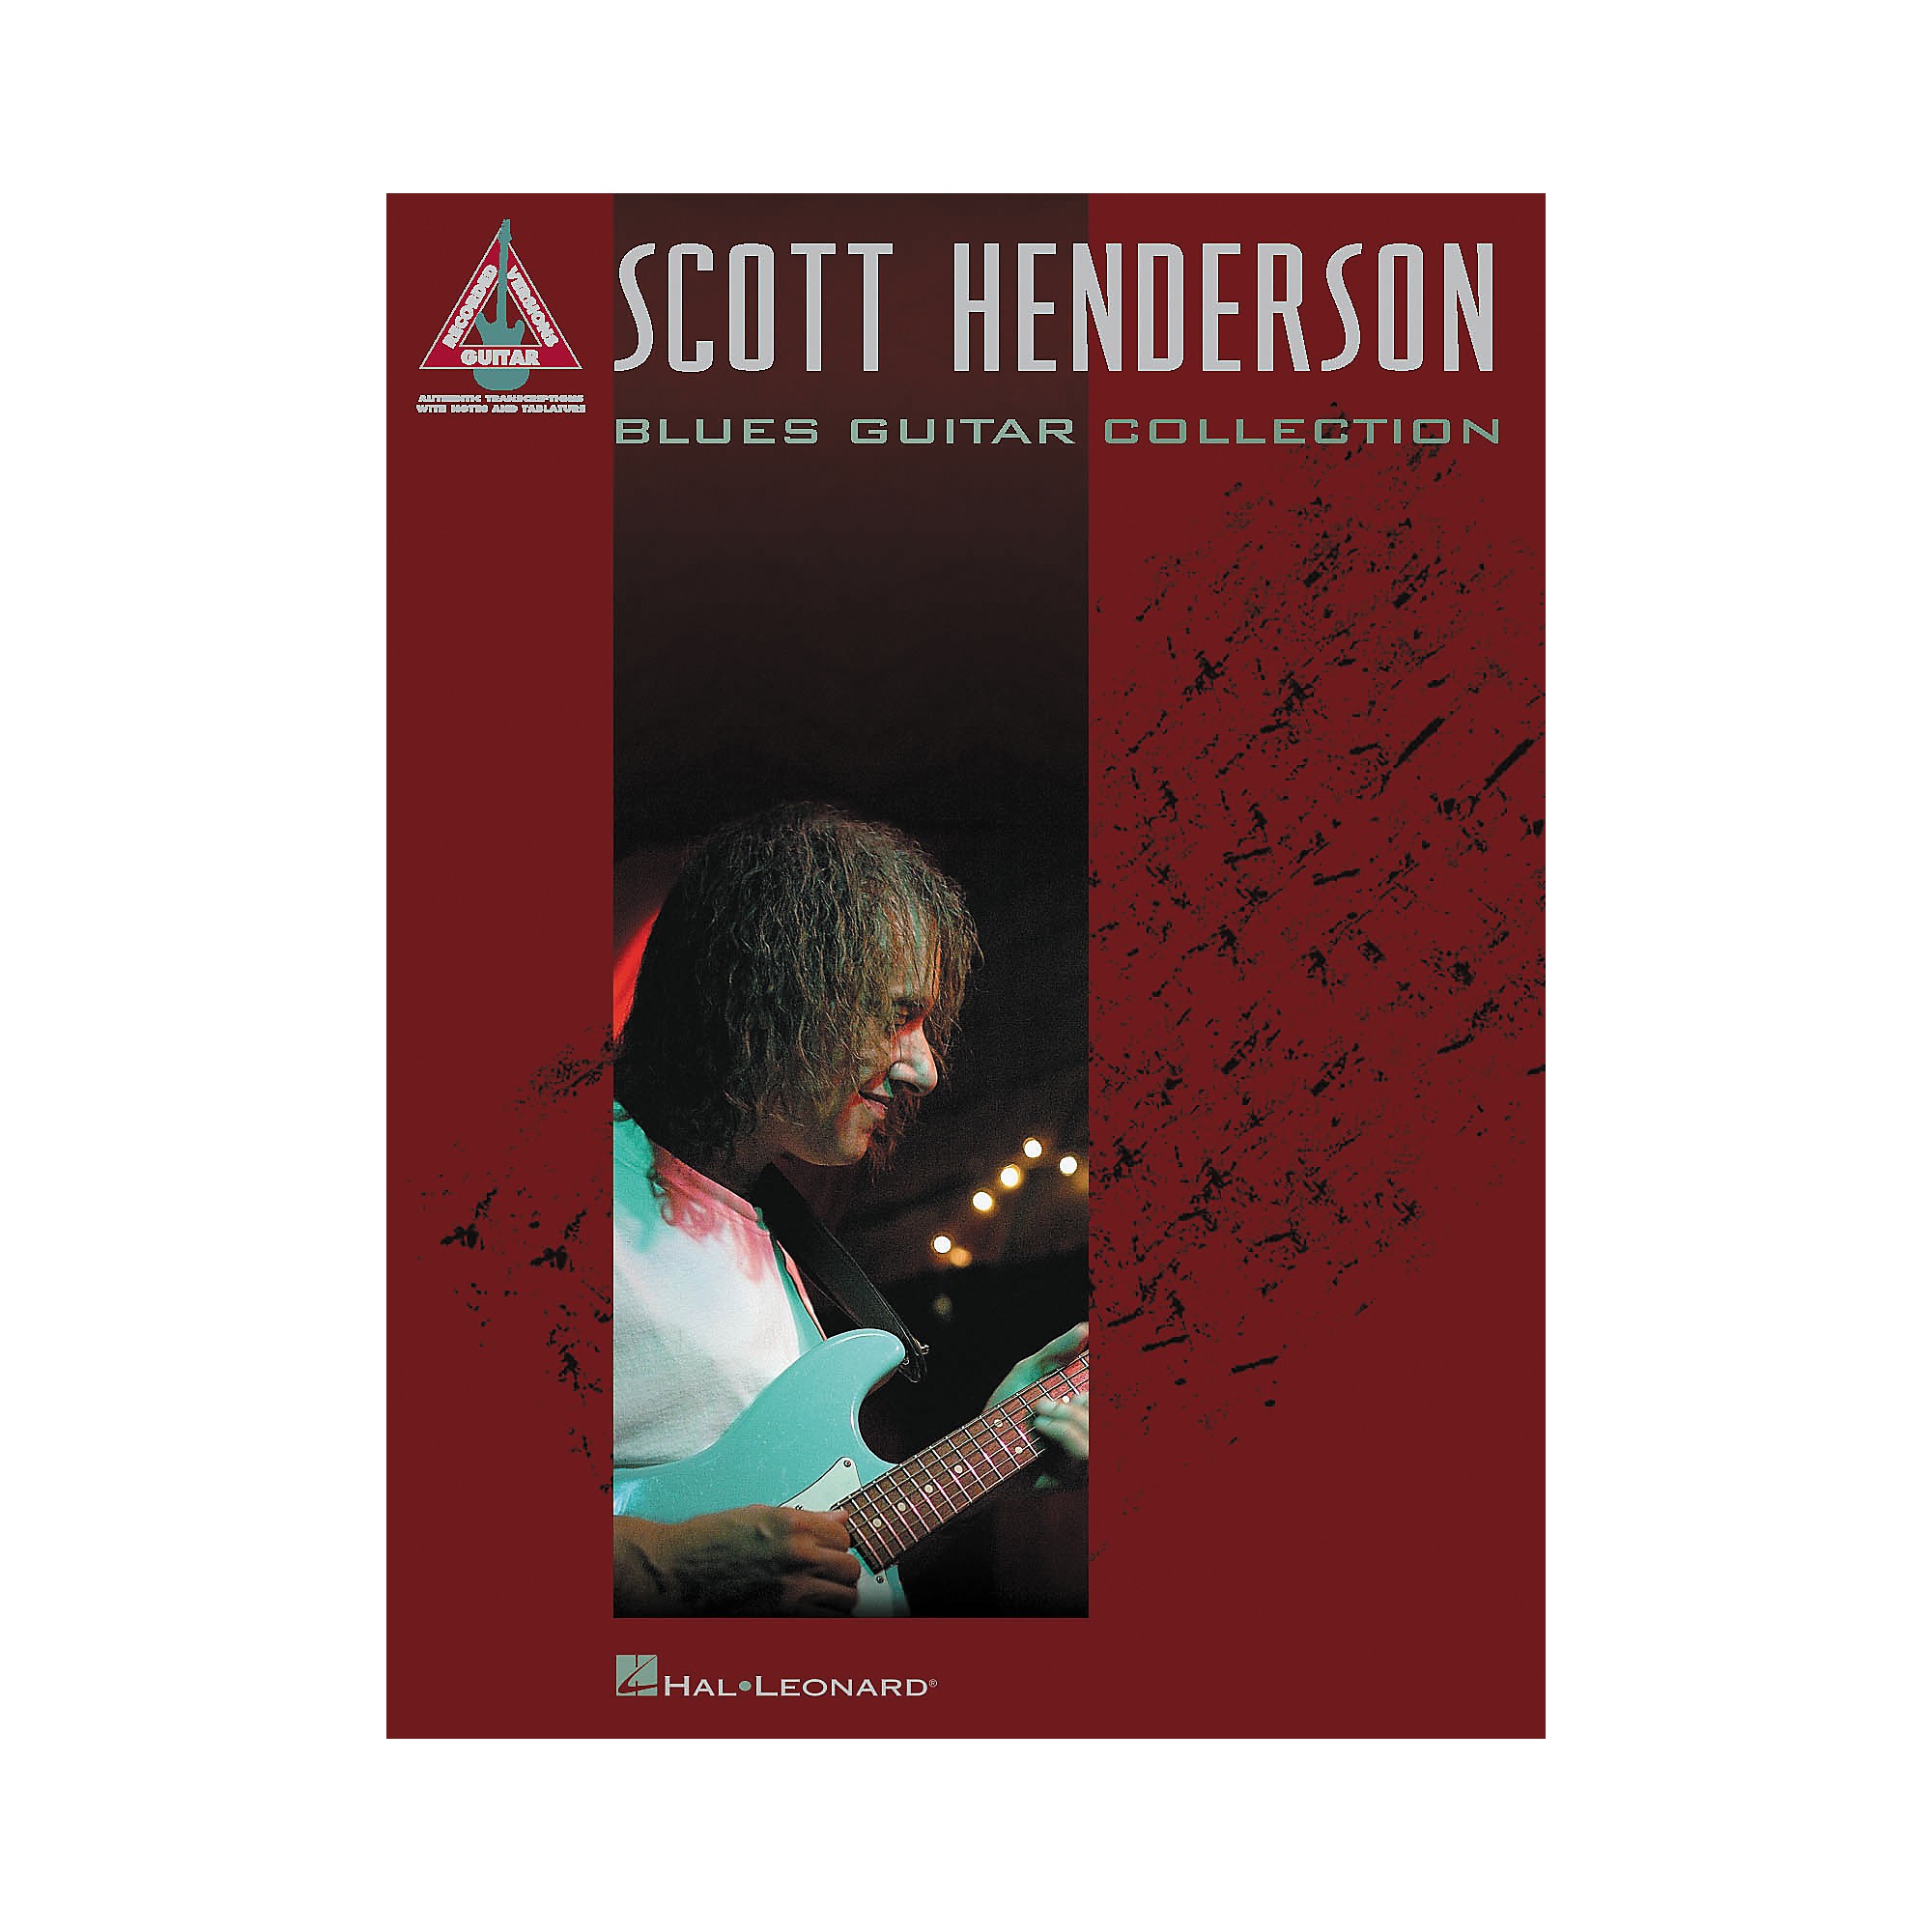 scott henderson blues guitar collection rar files